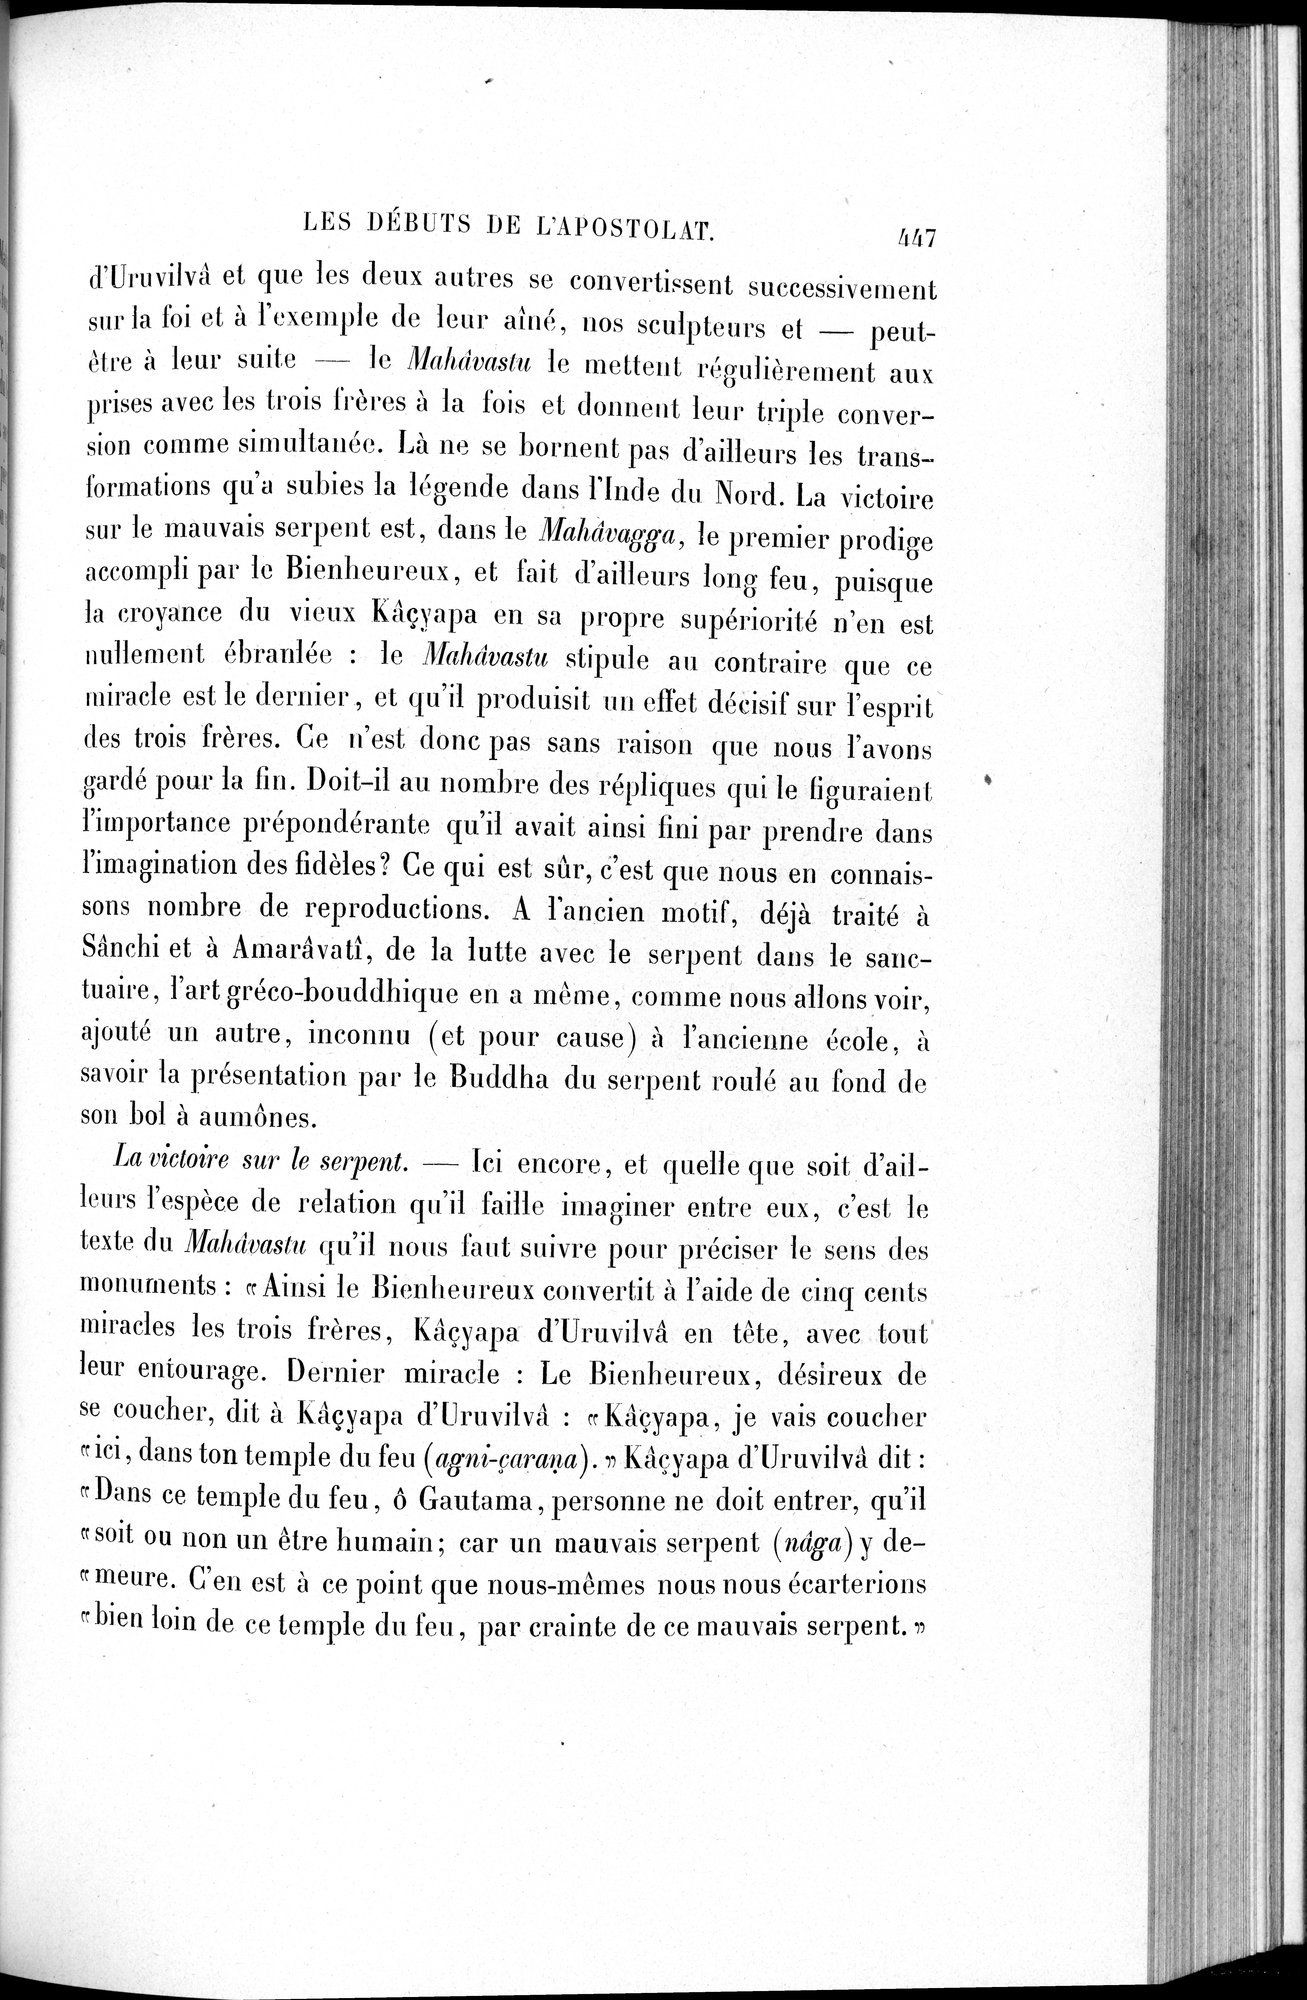 L'art Greco-Bouddhique du Gandhâra : vol.1 / Page 473 (Grayscale High Resolution Image)